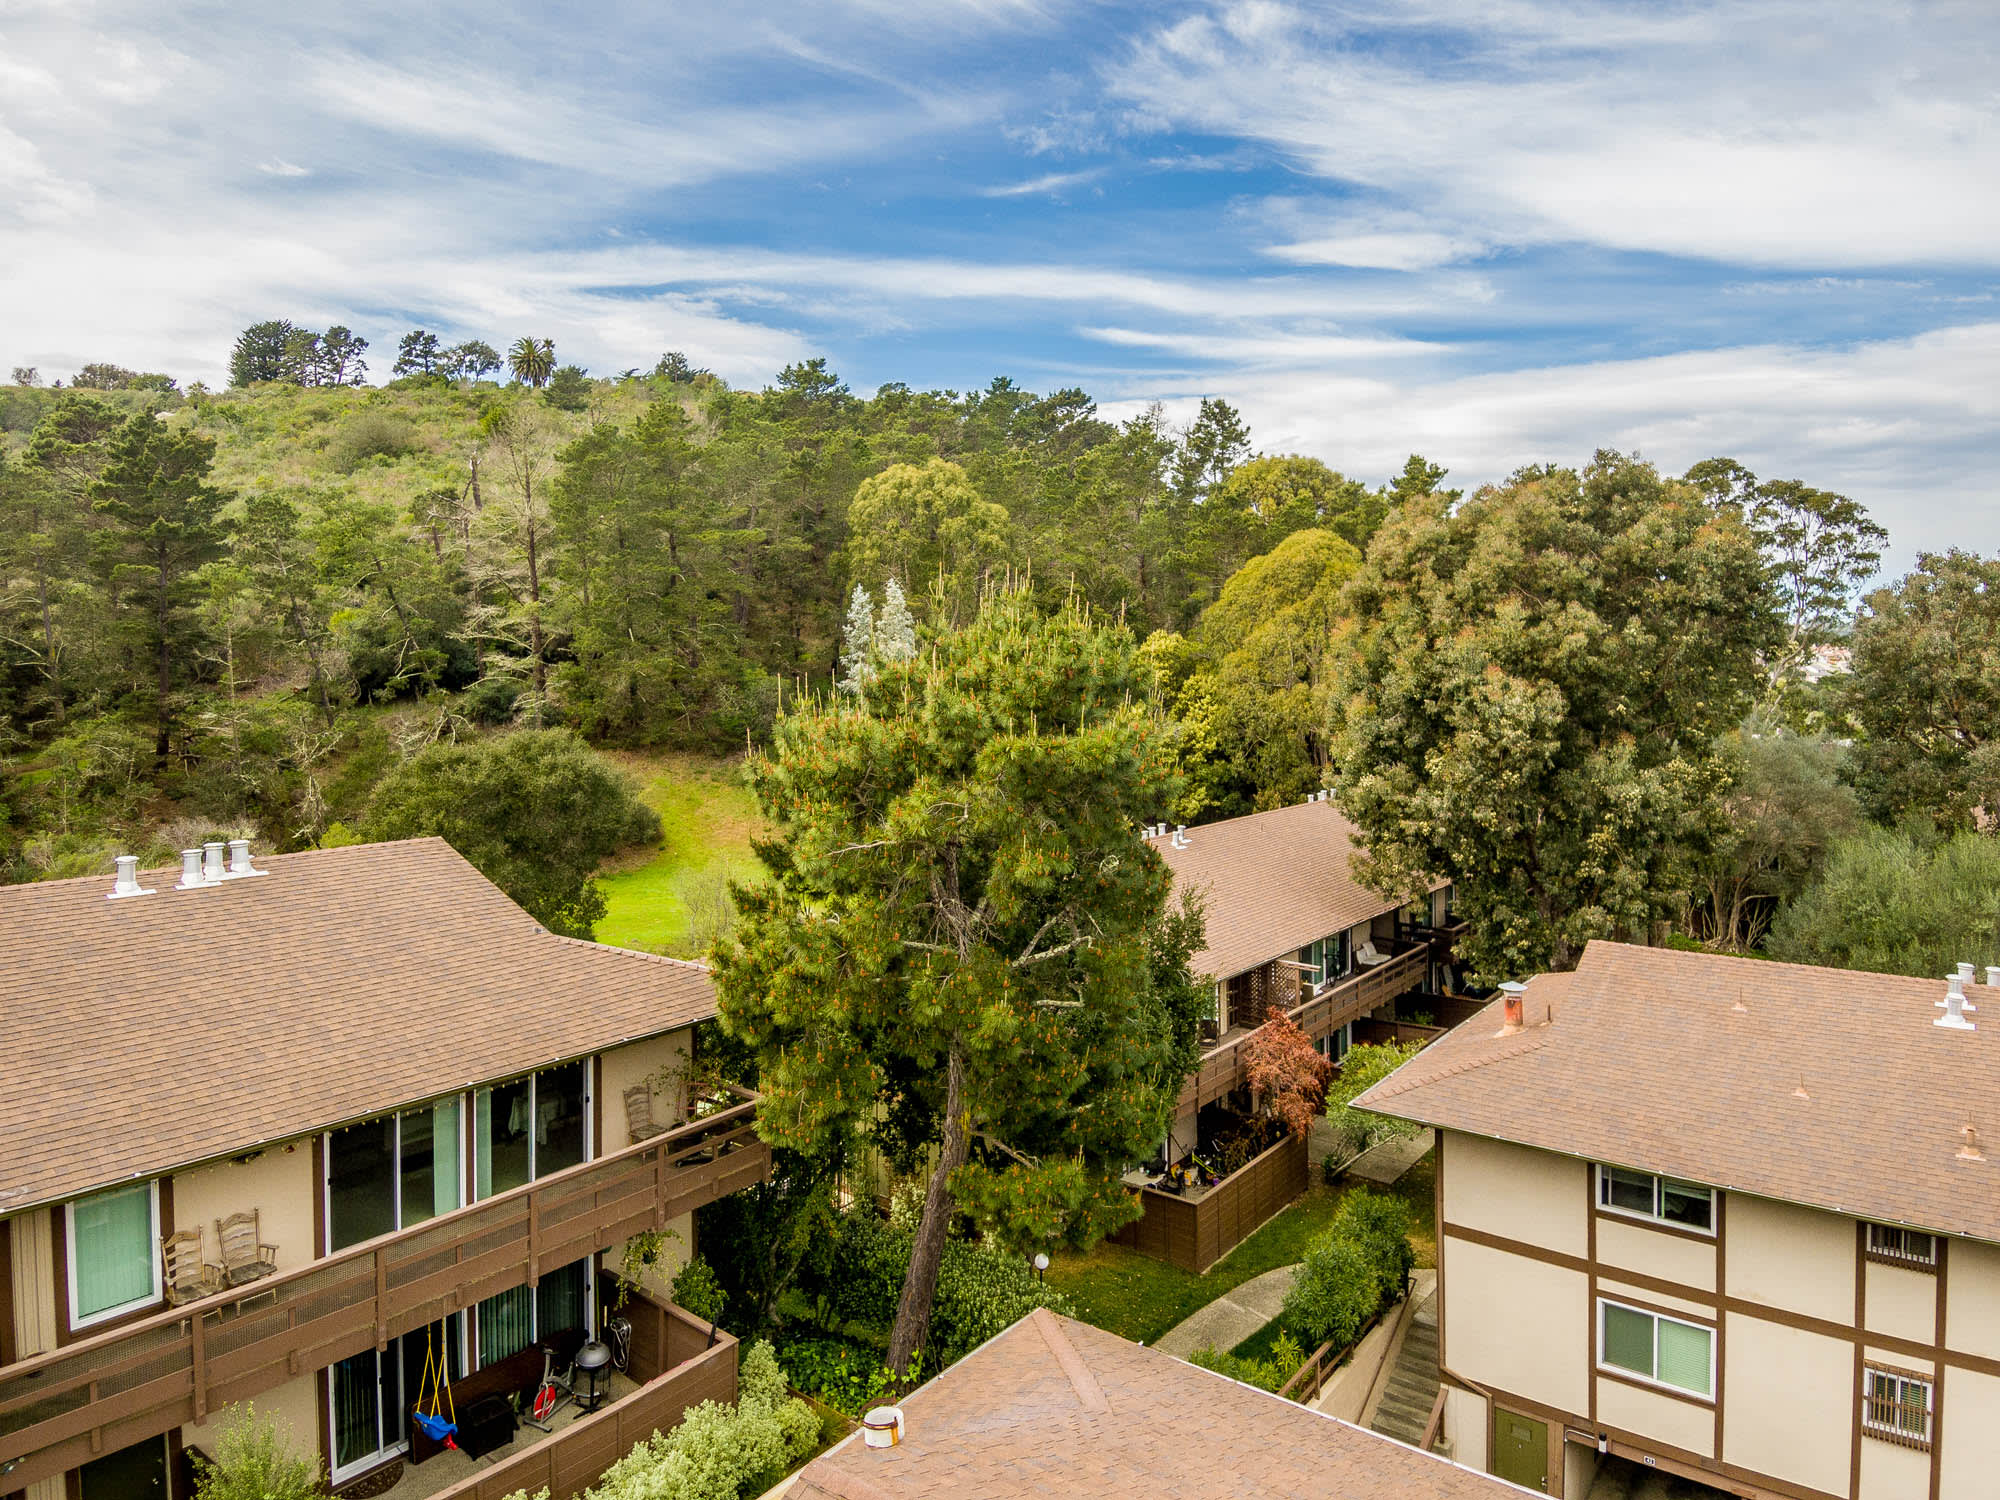 Hillside Garden Apartments In San Mateo Ca